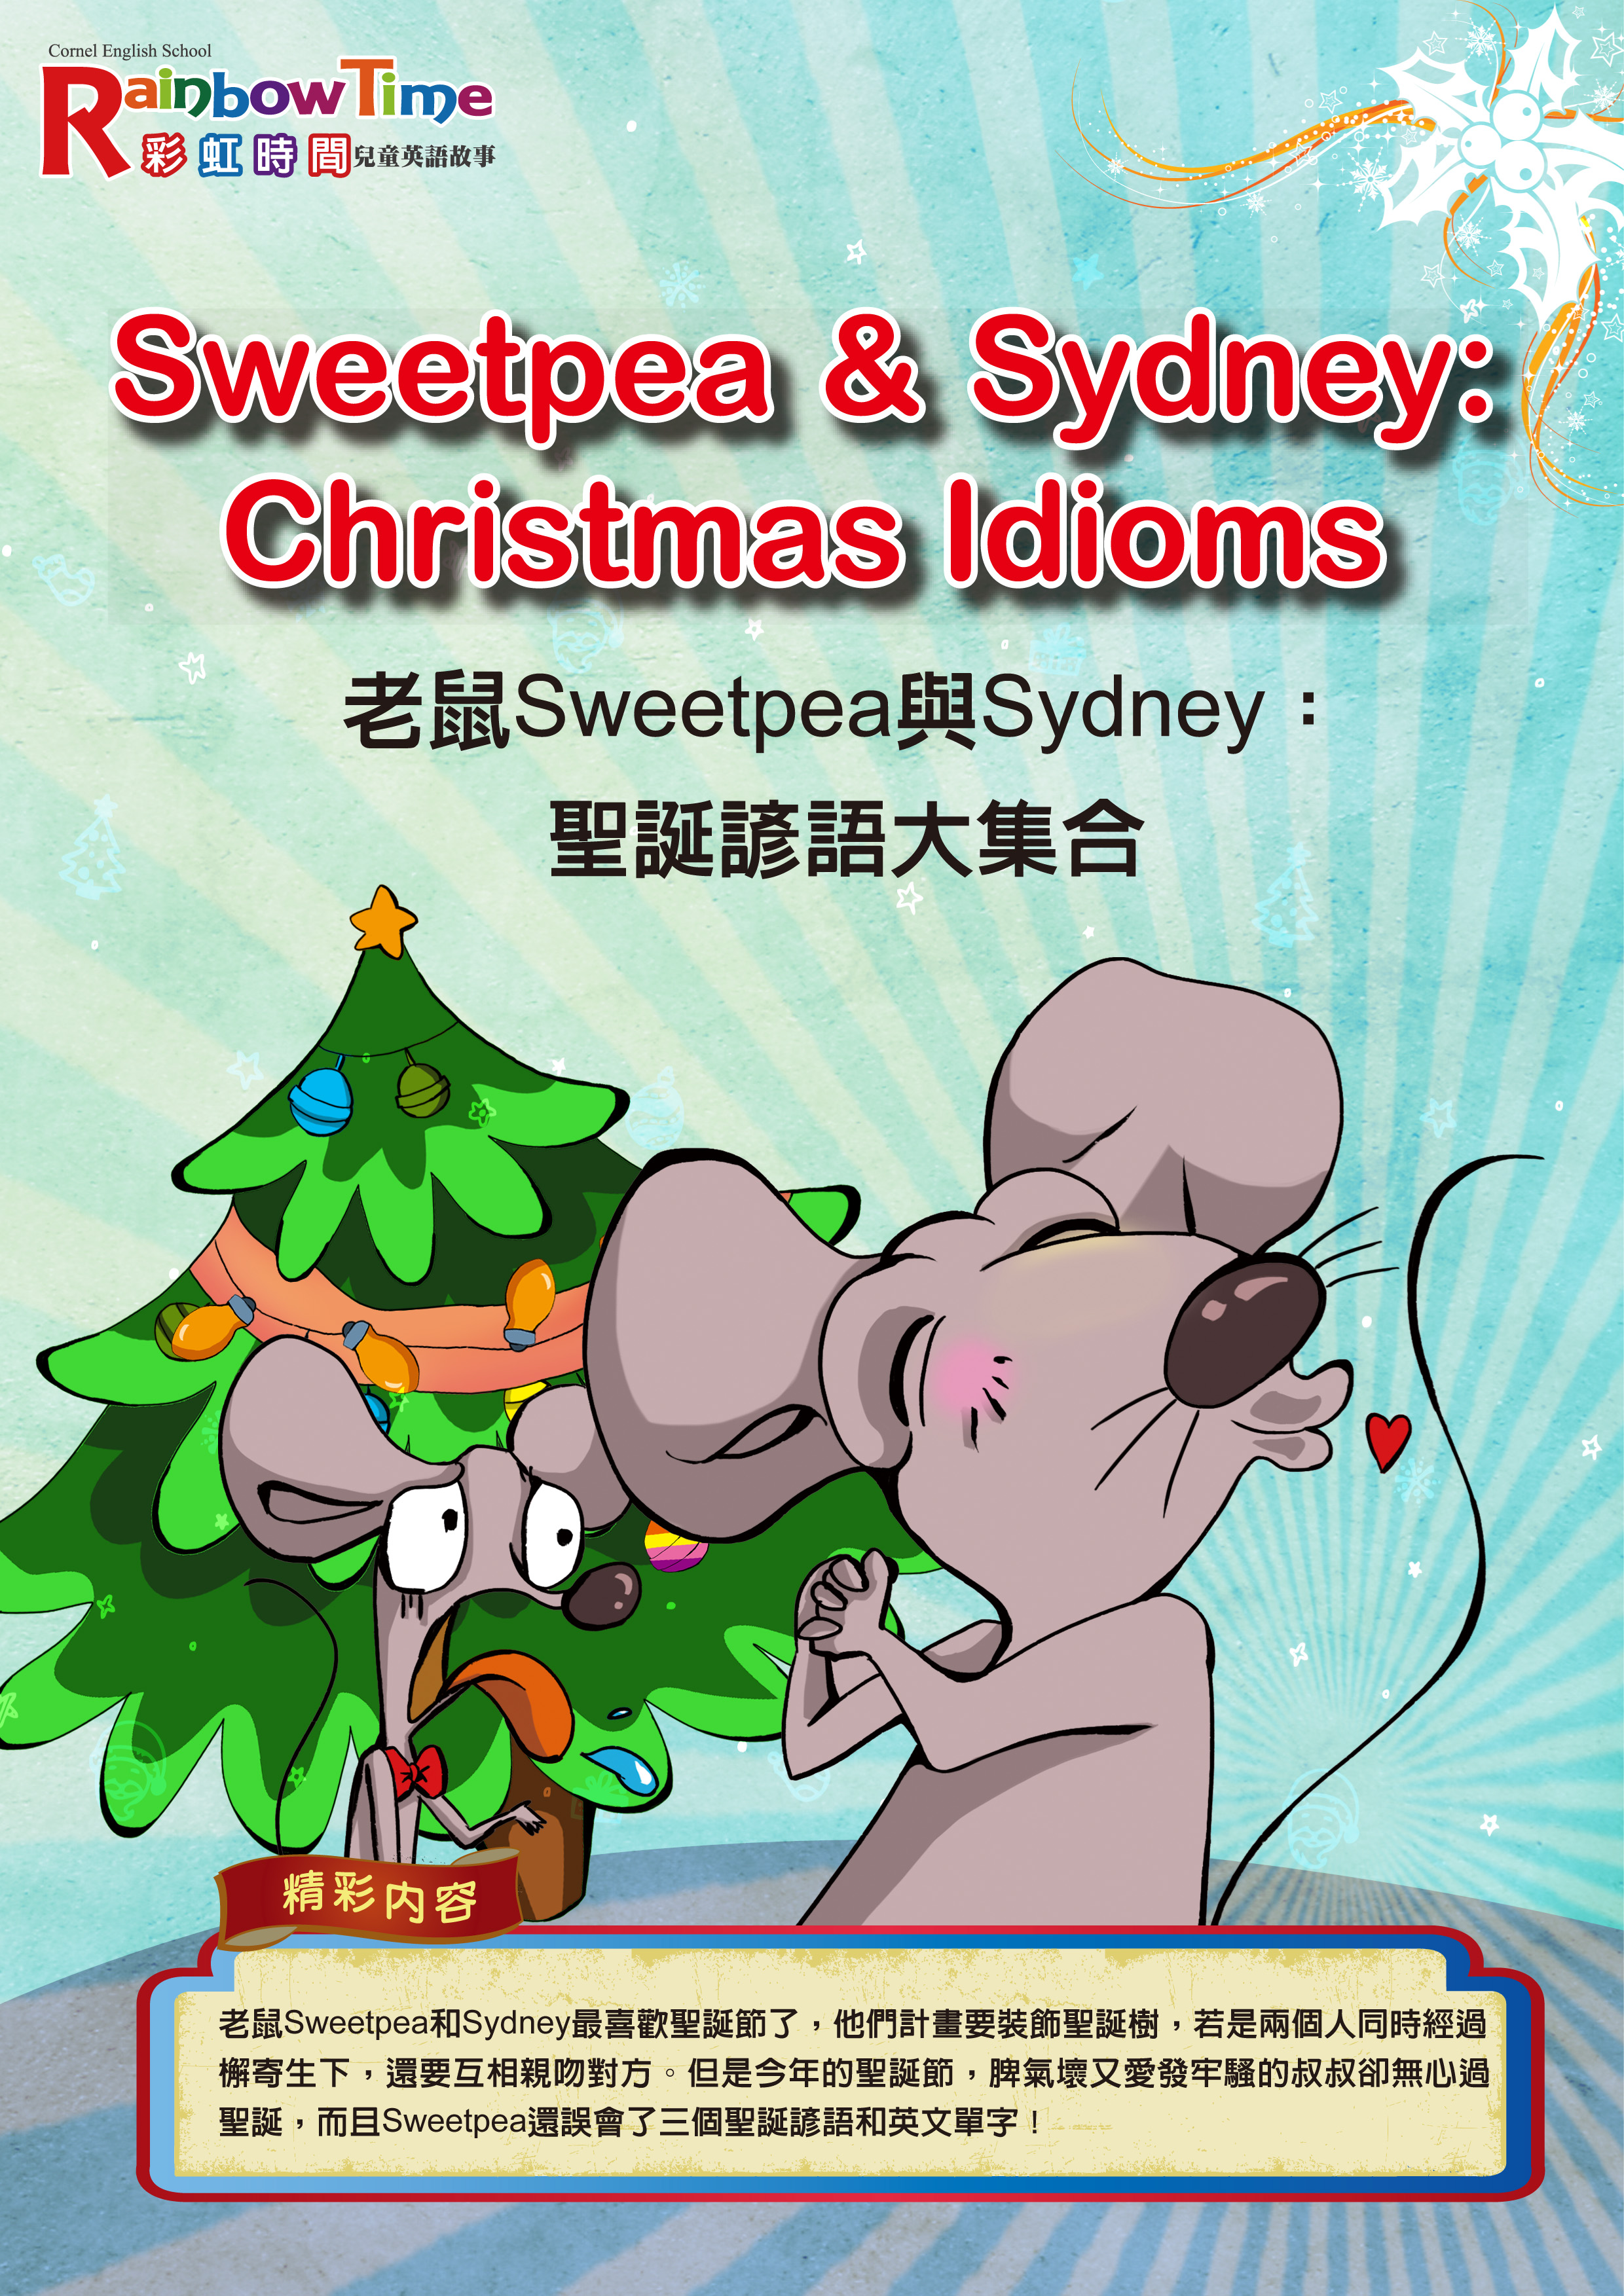 Sweetpea & Sydney: Christmas Idioms